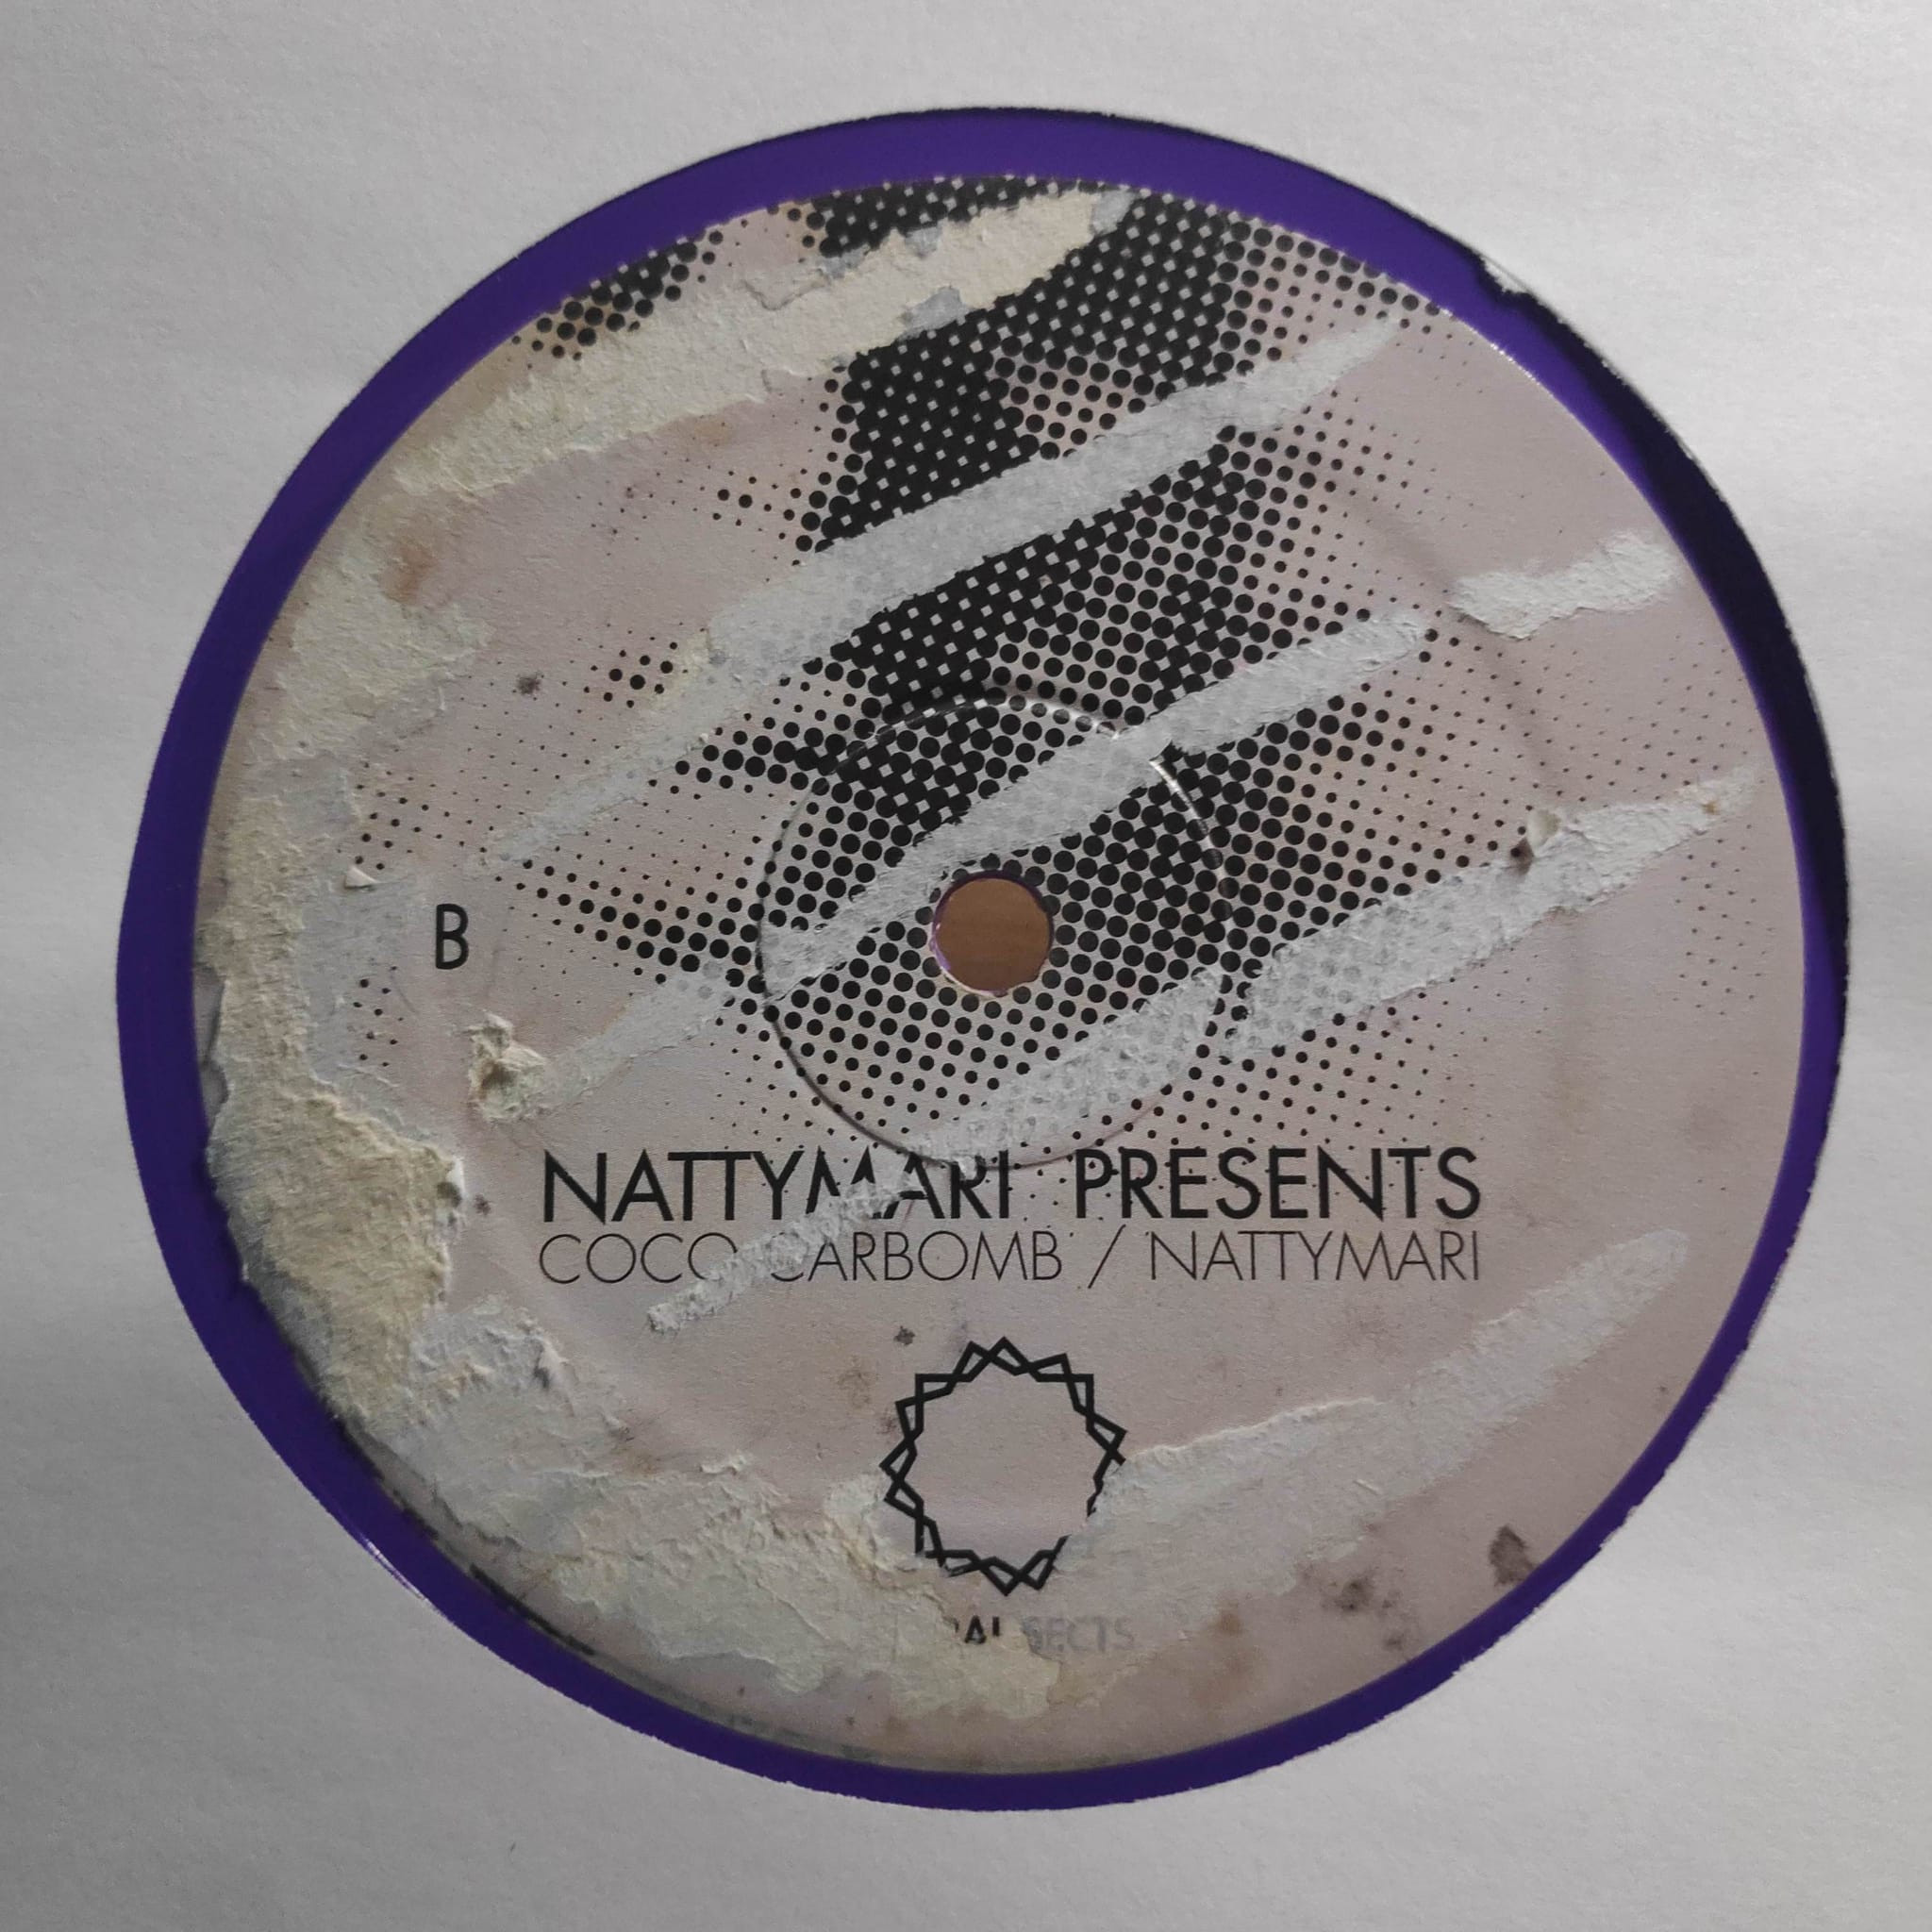 (CO727) Coco Carbomb / Nattymari – Nattymari Presents (VG/GENERIC)